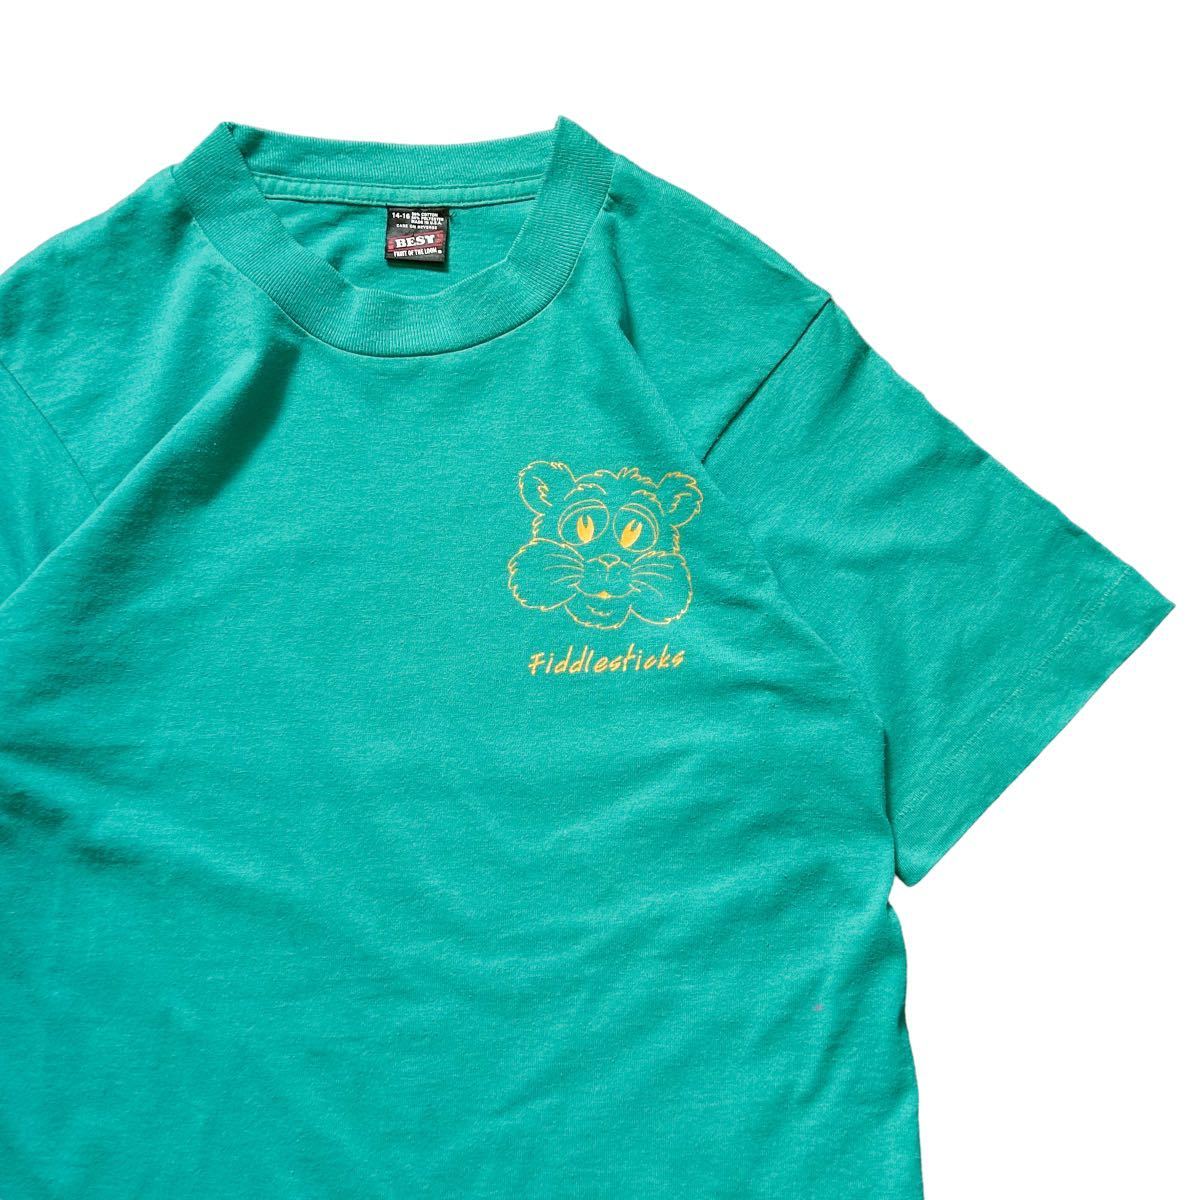 USA製 90’s FRUIT OF THE LOOM ヴィンテージ Tシャツ 緑 グリーン キッズ 14-16サイズ メンズSサイズ相当 アニマル プリント レディース_画像4